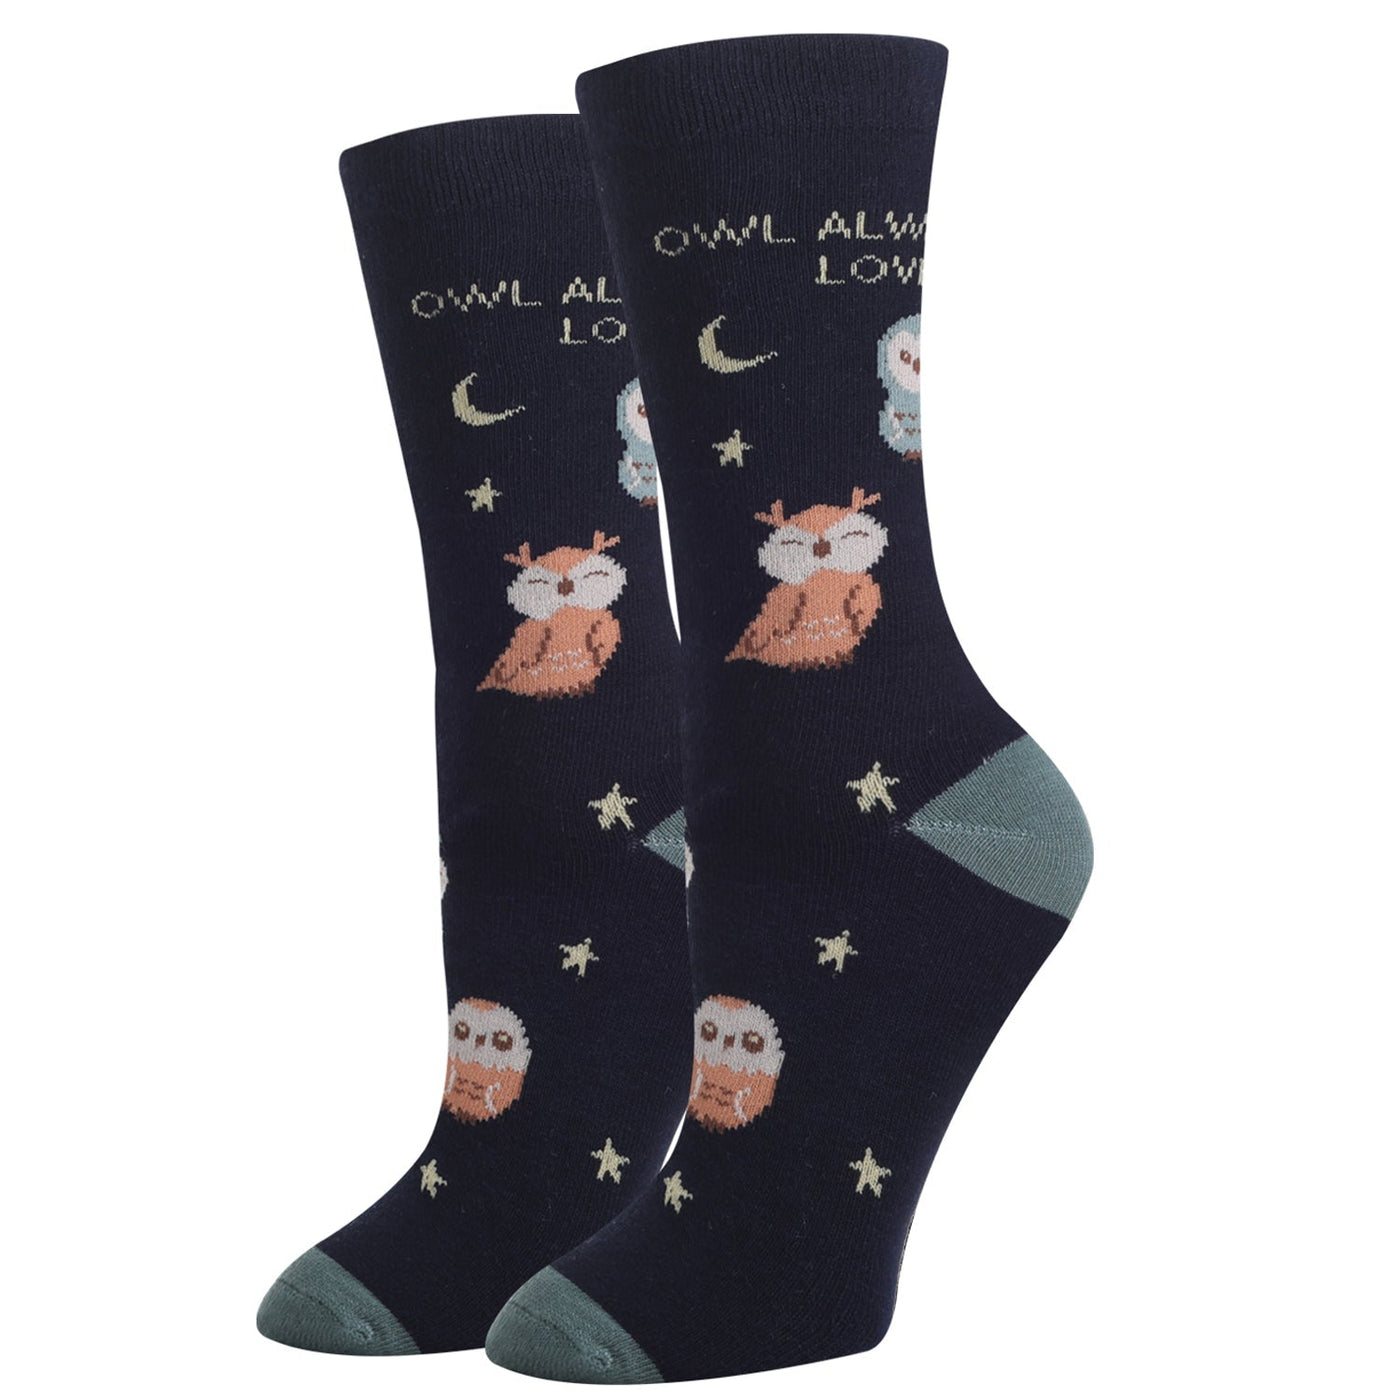 Sock Harbor - Owl Always Love You Crew Socks | Women's - Knock Your Socks Off